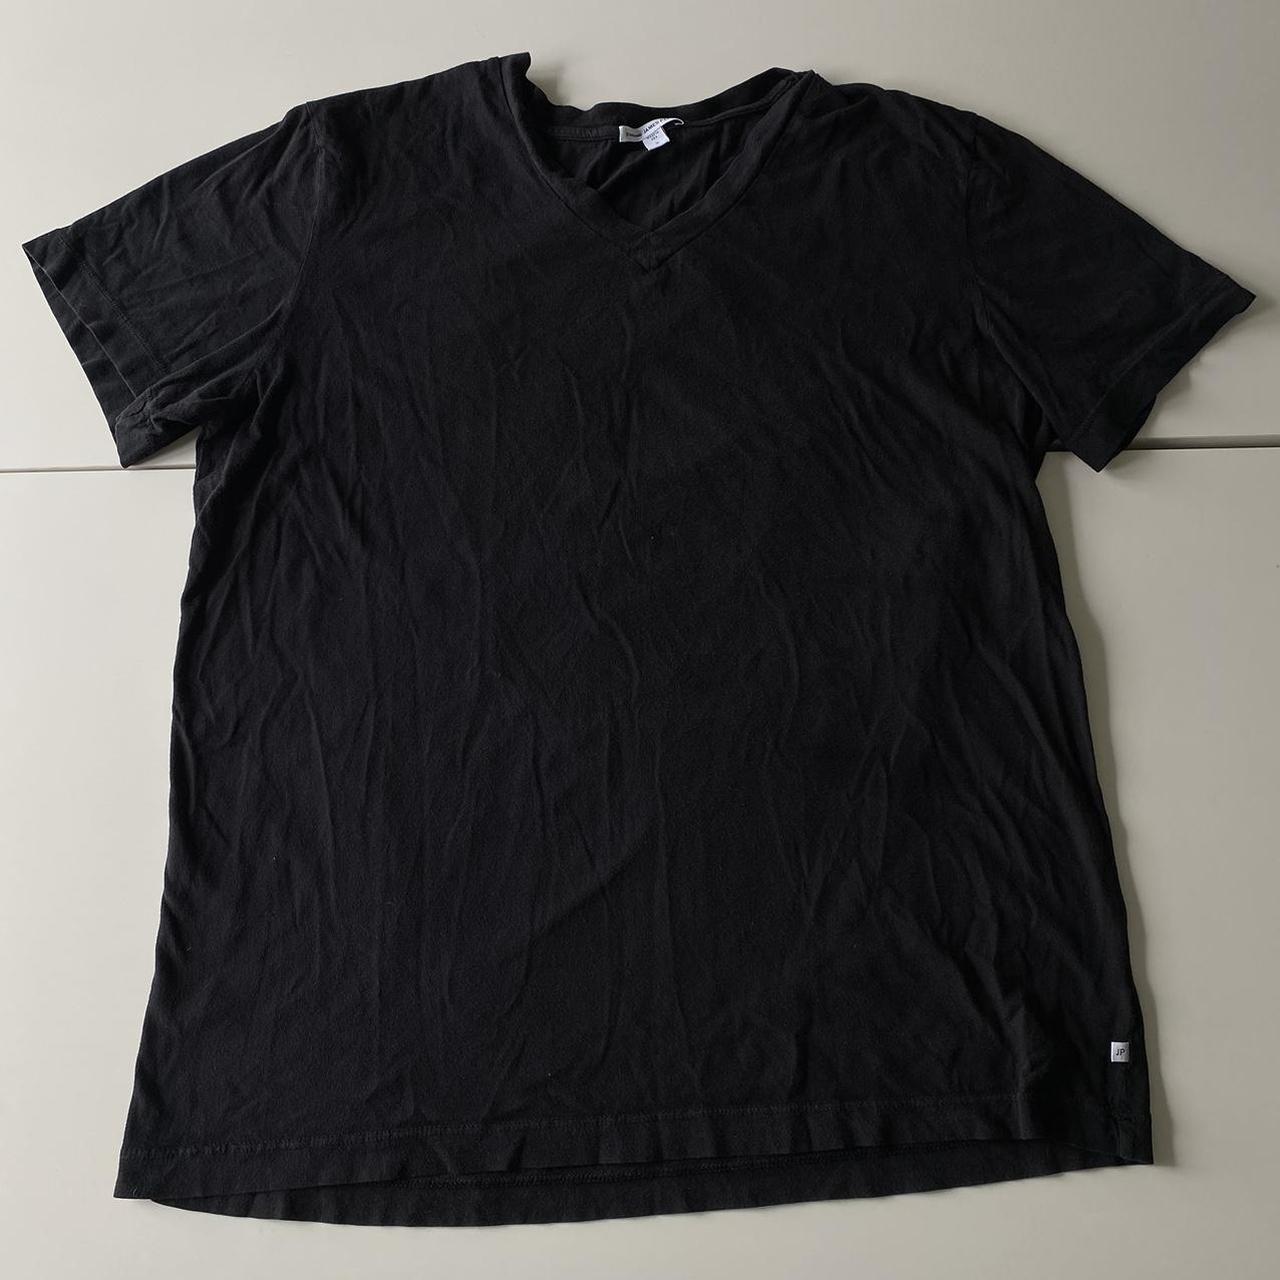 James Perse Women's Black T-shirt (2)